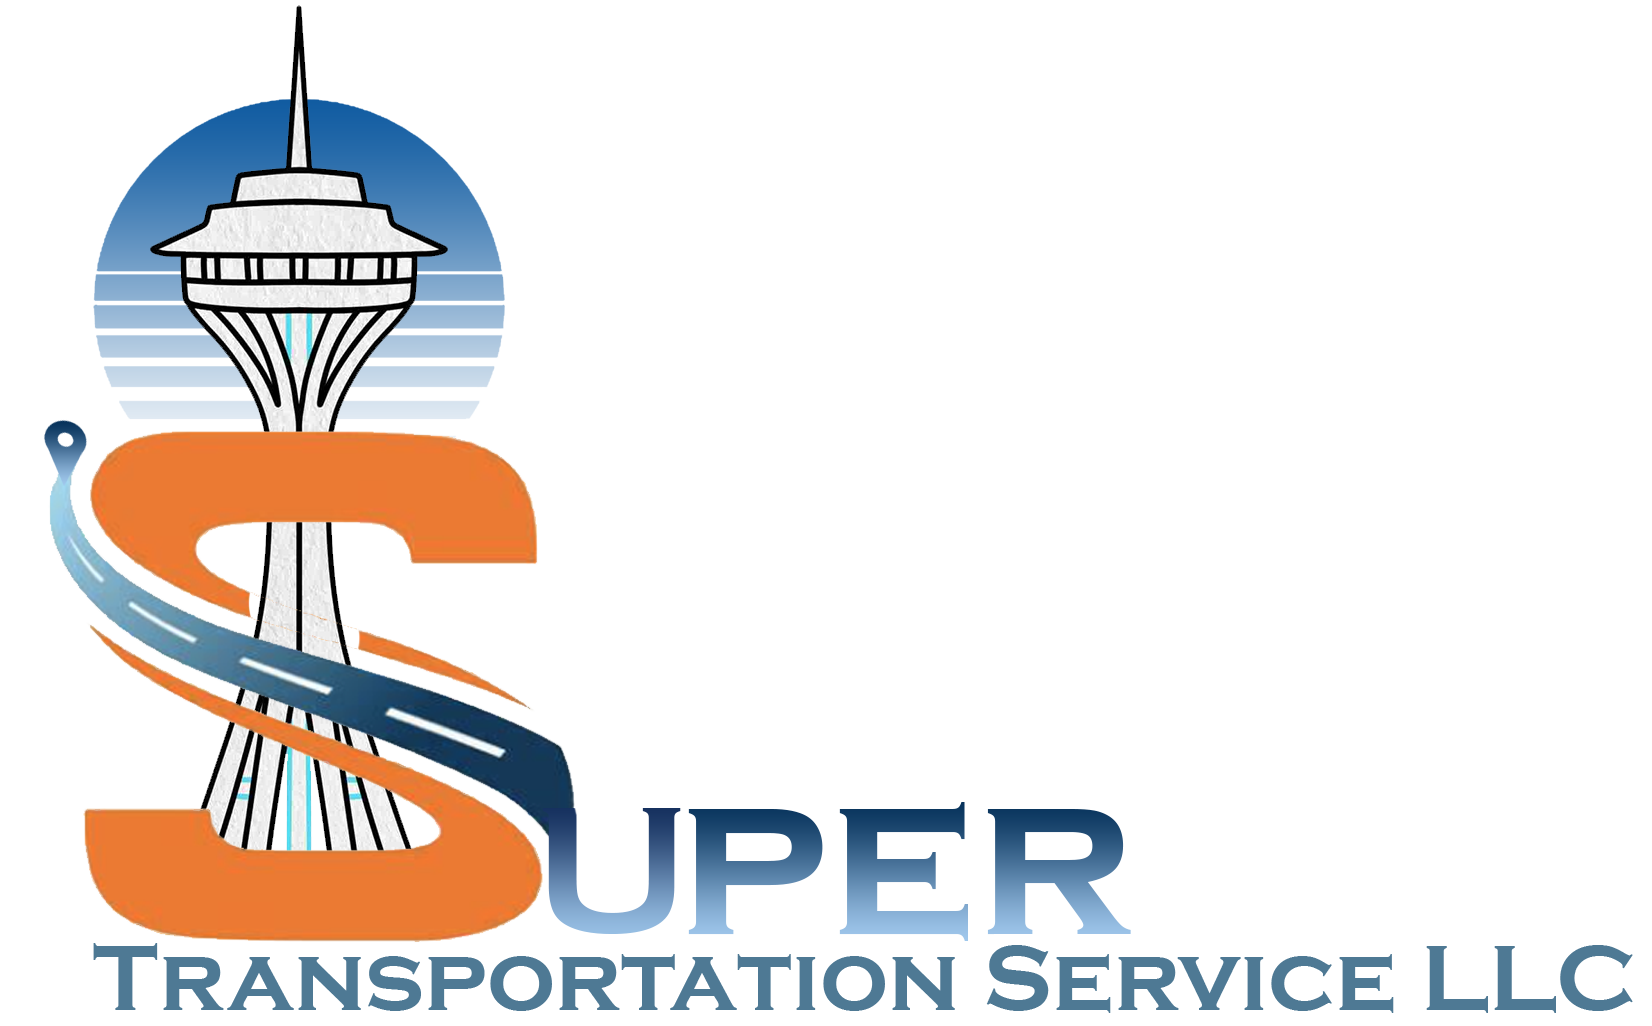 Super Transportation Service